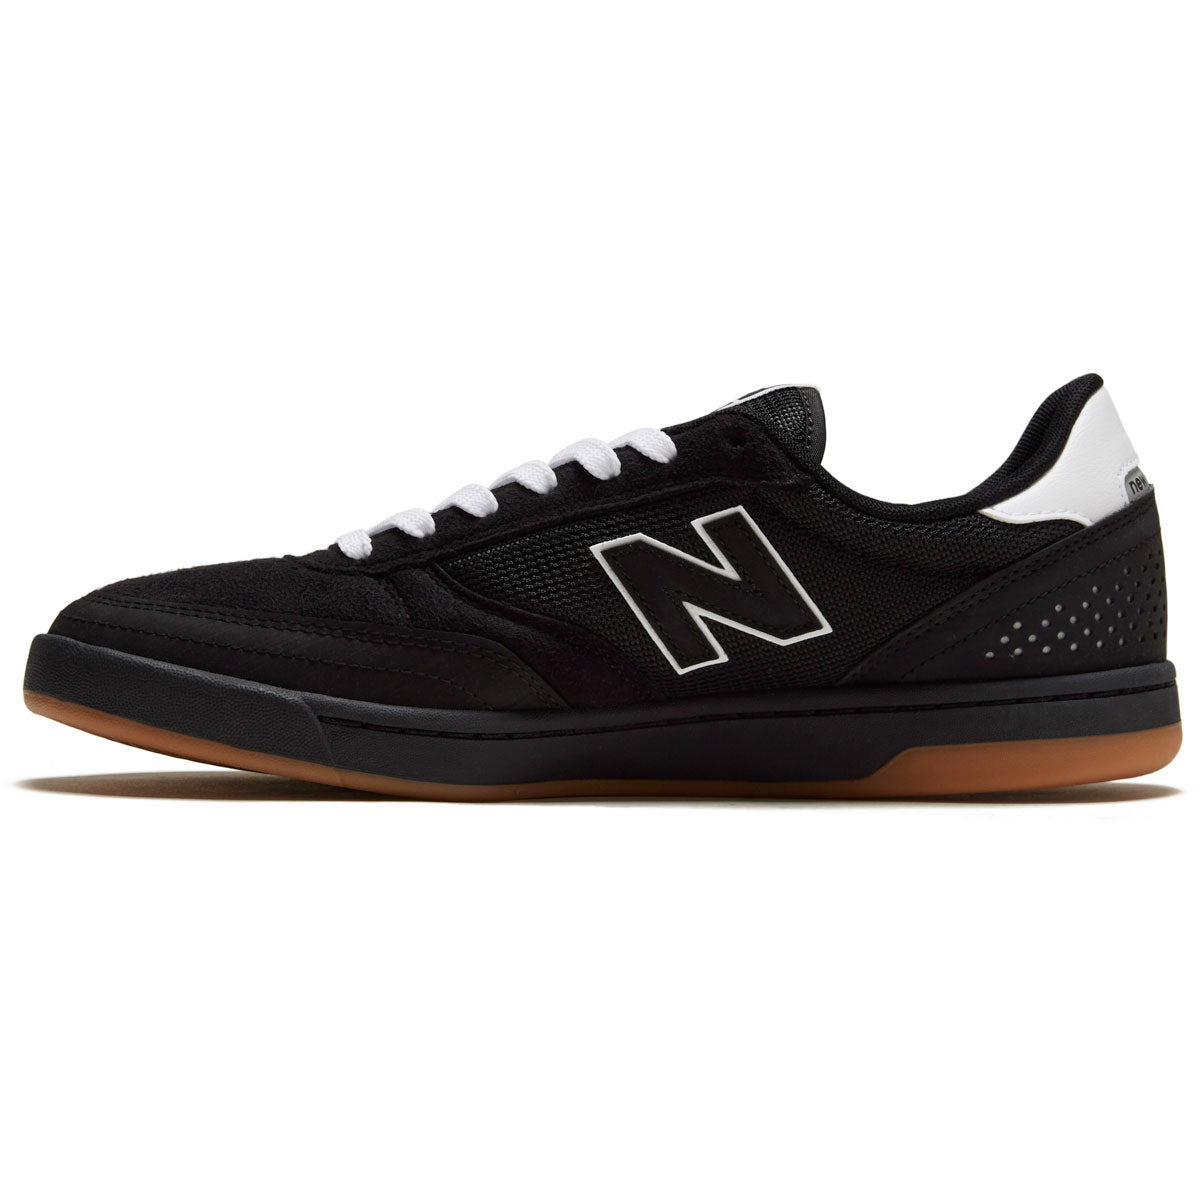 New Balance 440 Shoes - Black/White Vegan image 2